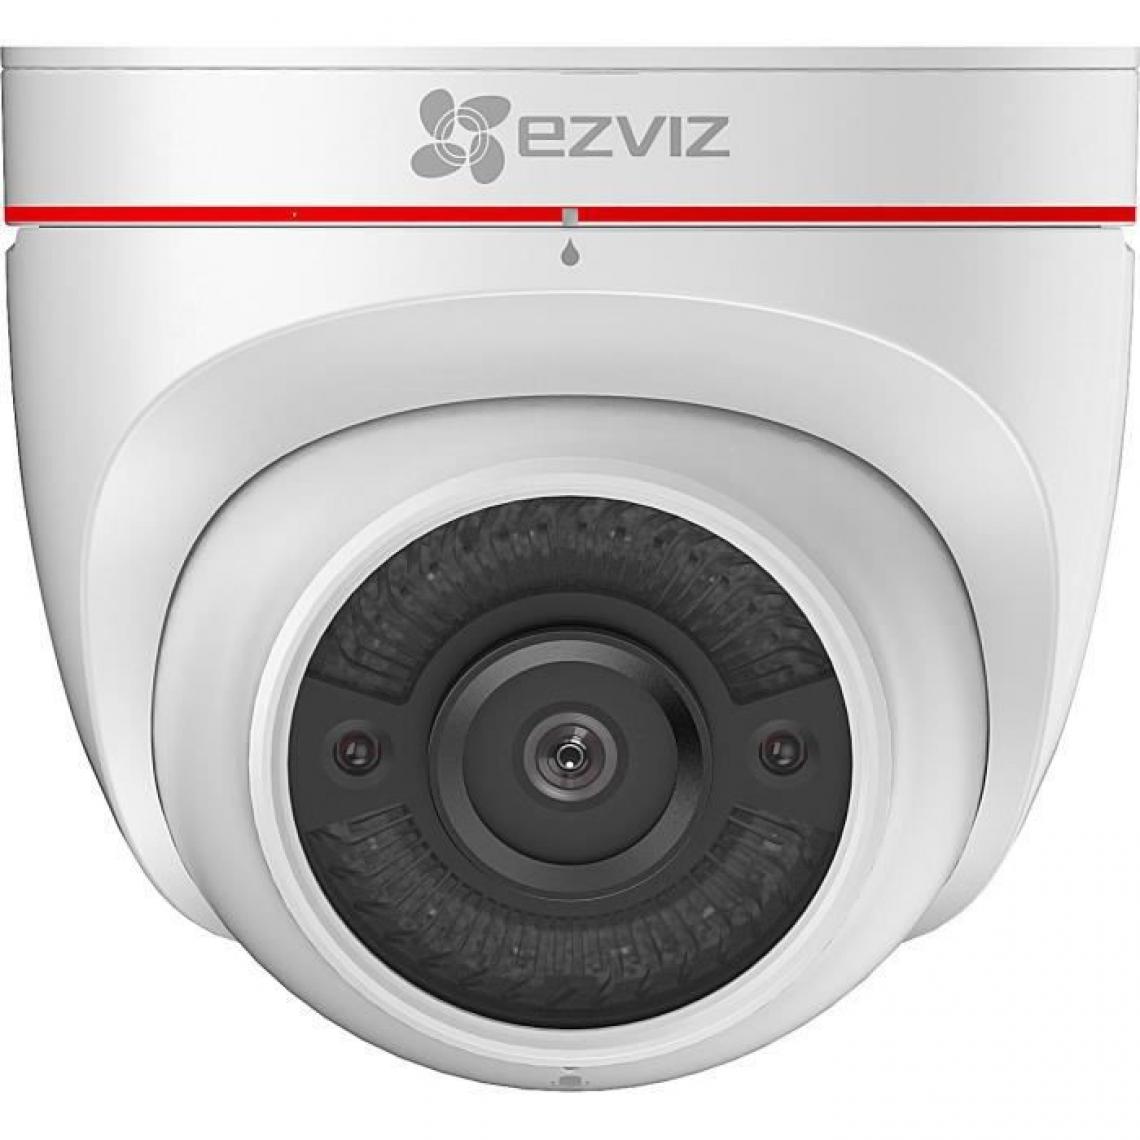 Ezviz - EZVIZ CAMERA 360 C4W - Caméra de surveillance connectée